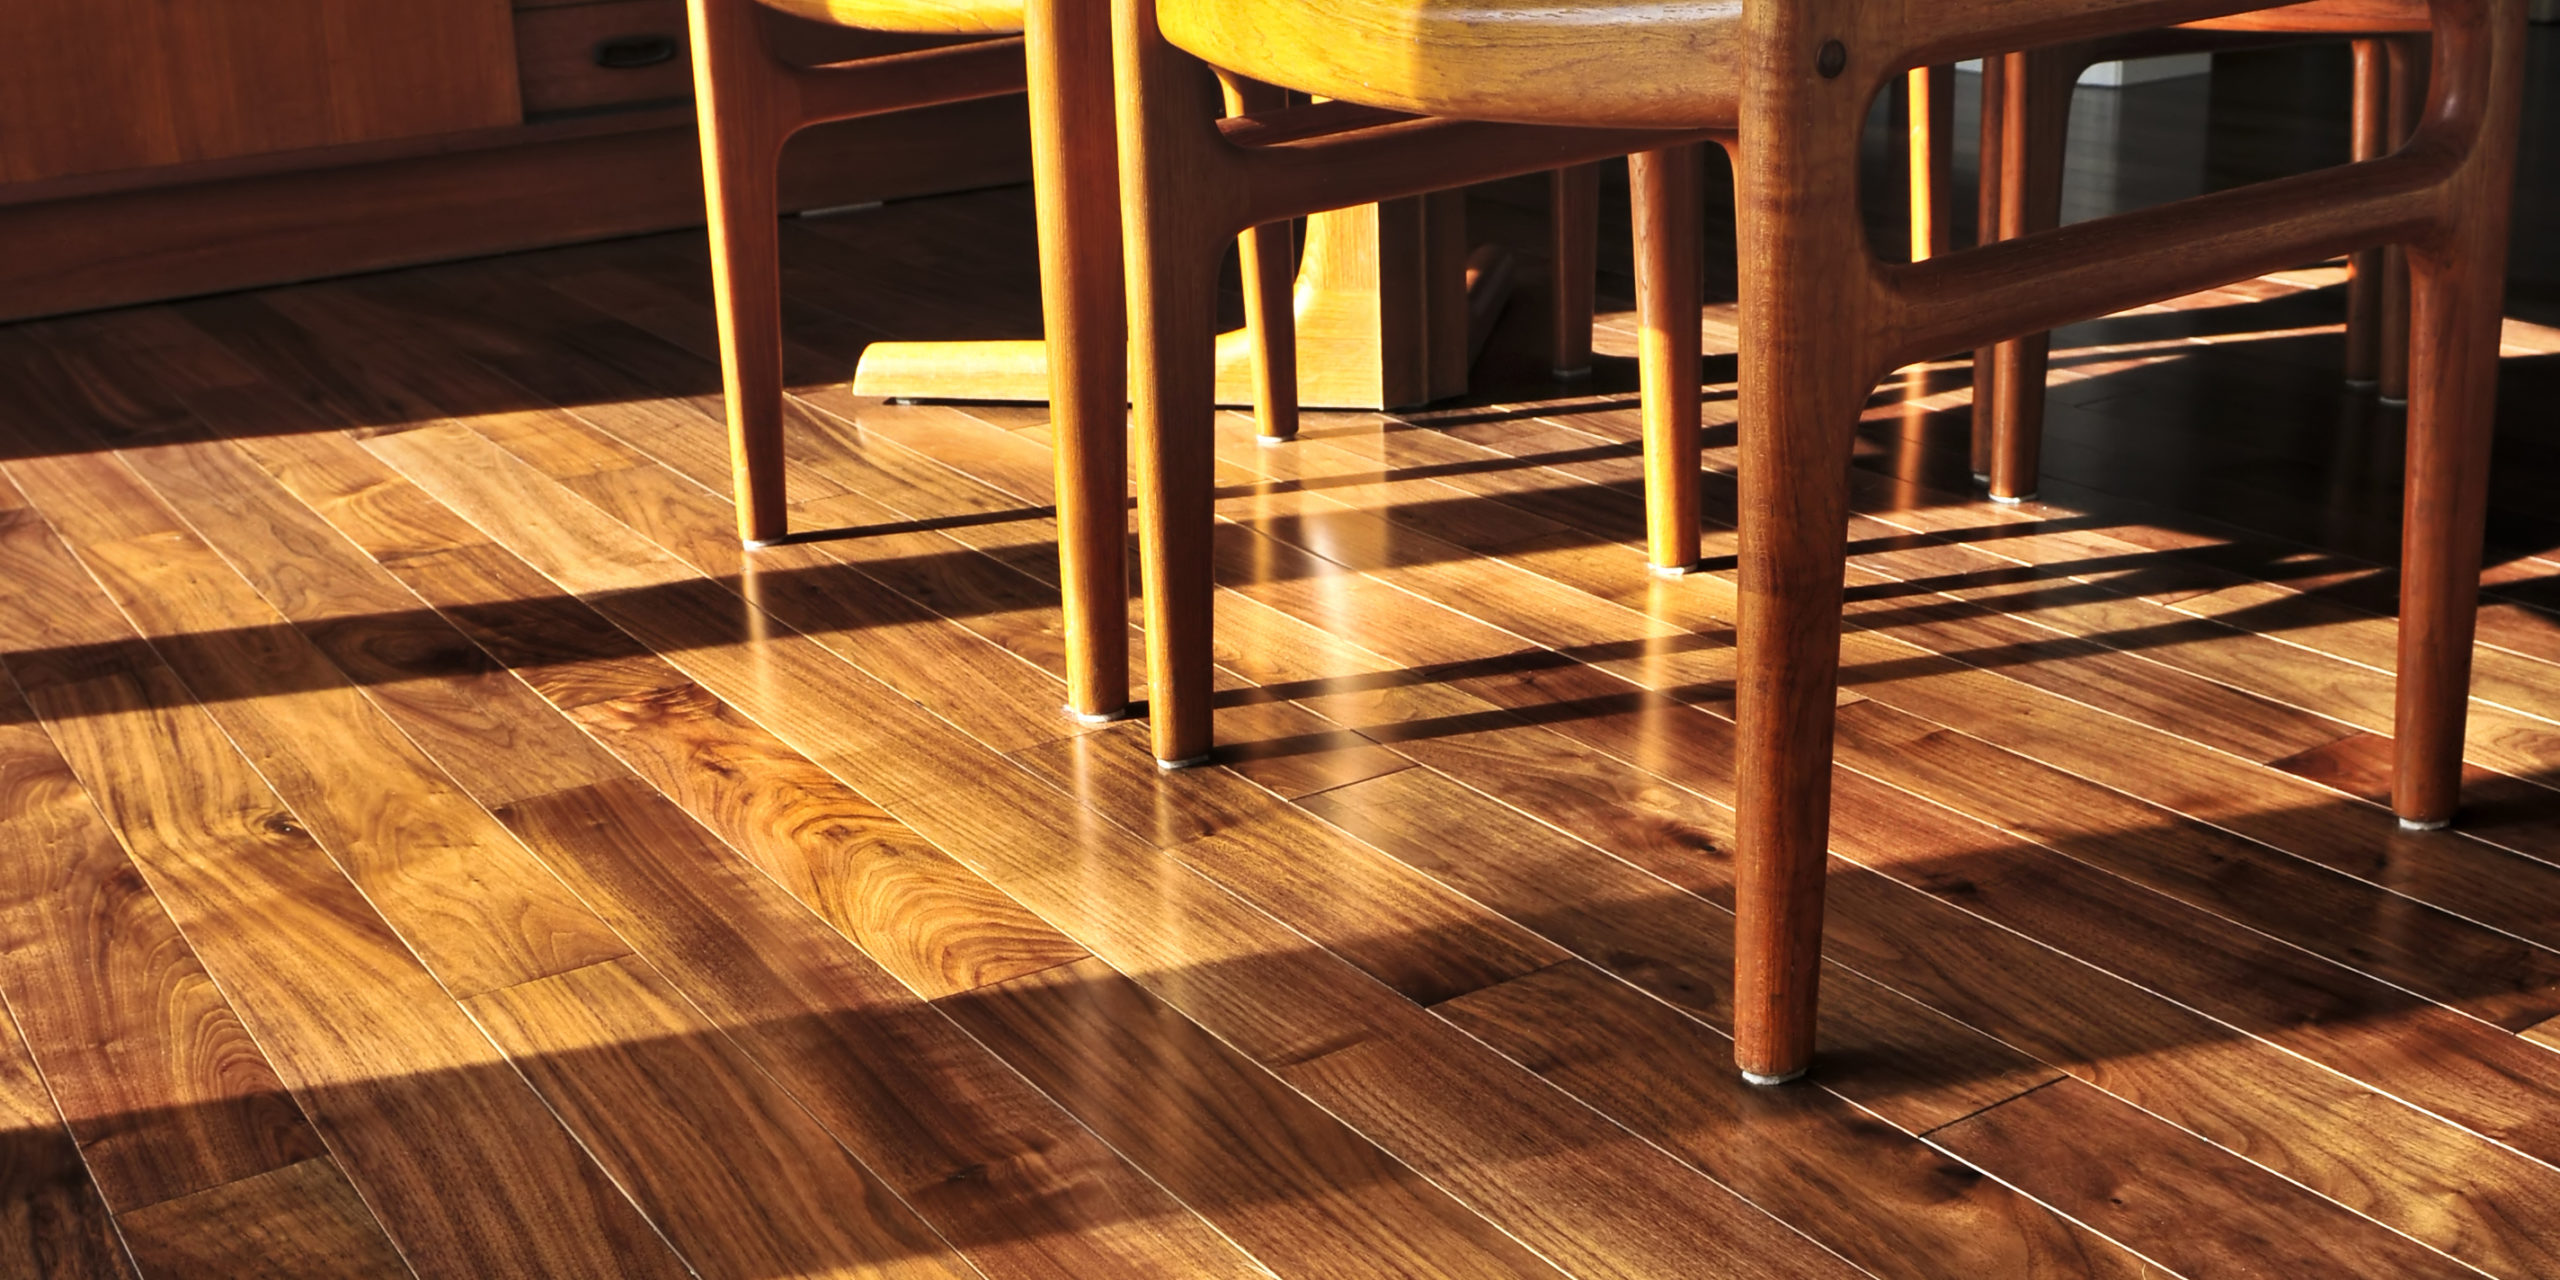 What does walnut flooring look like